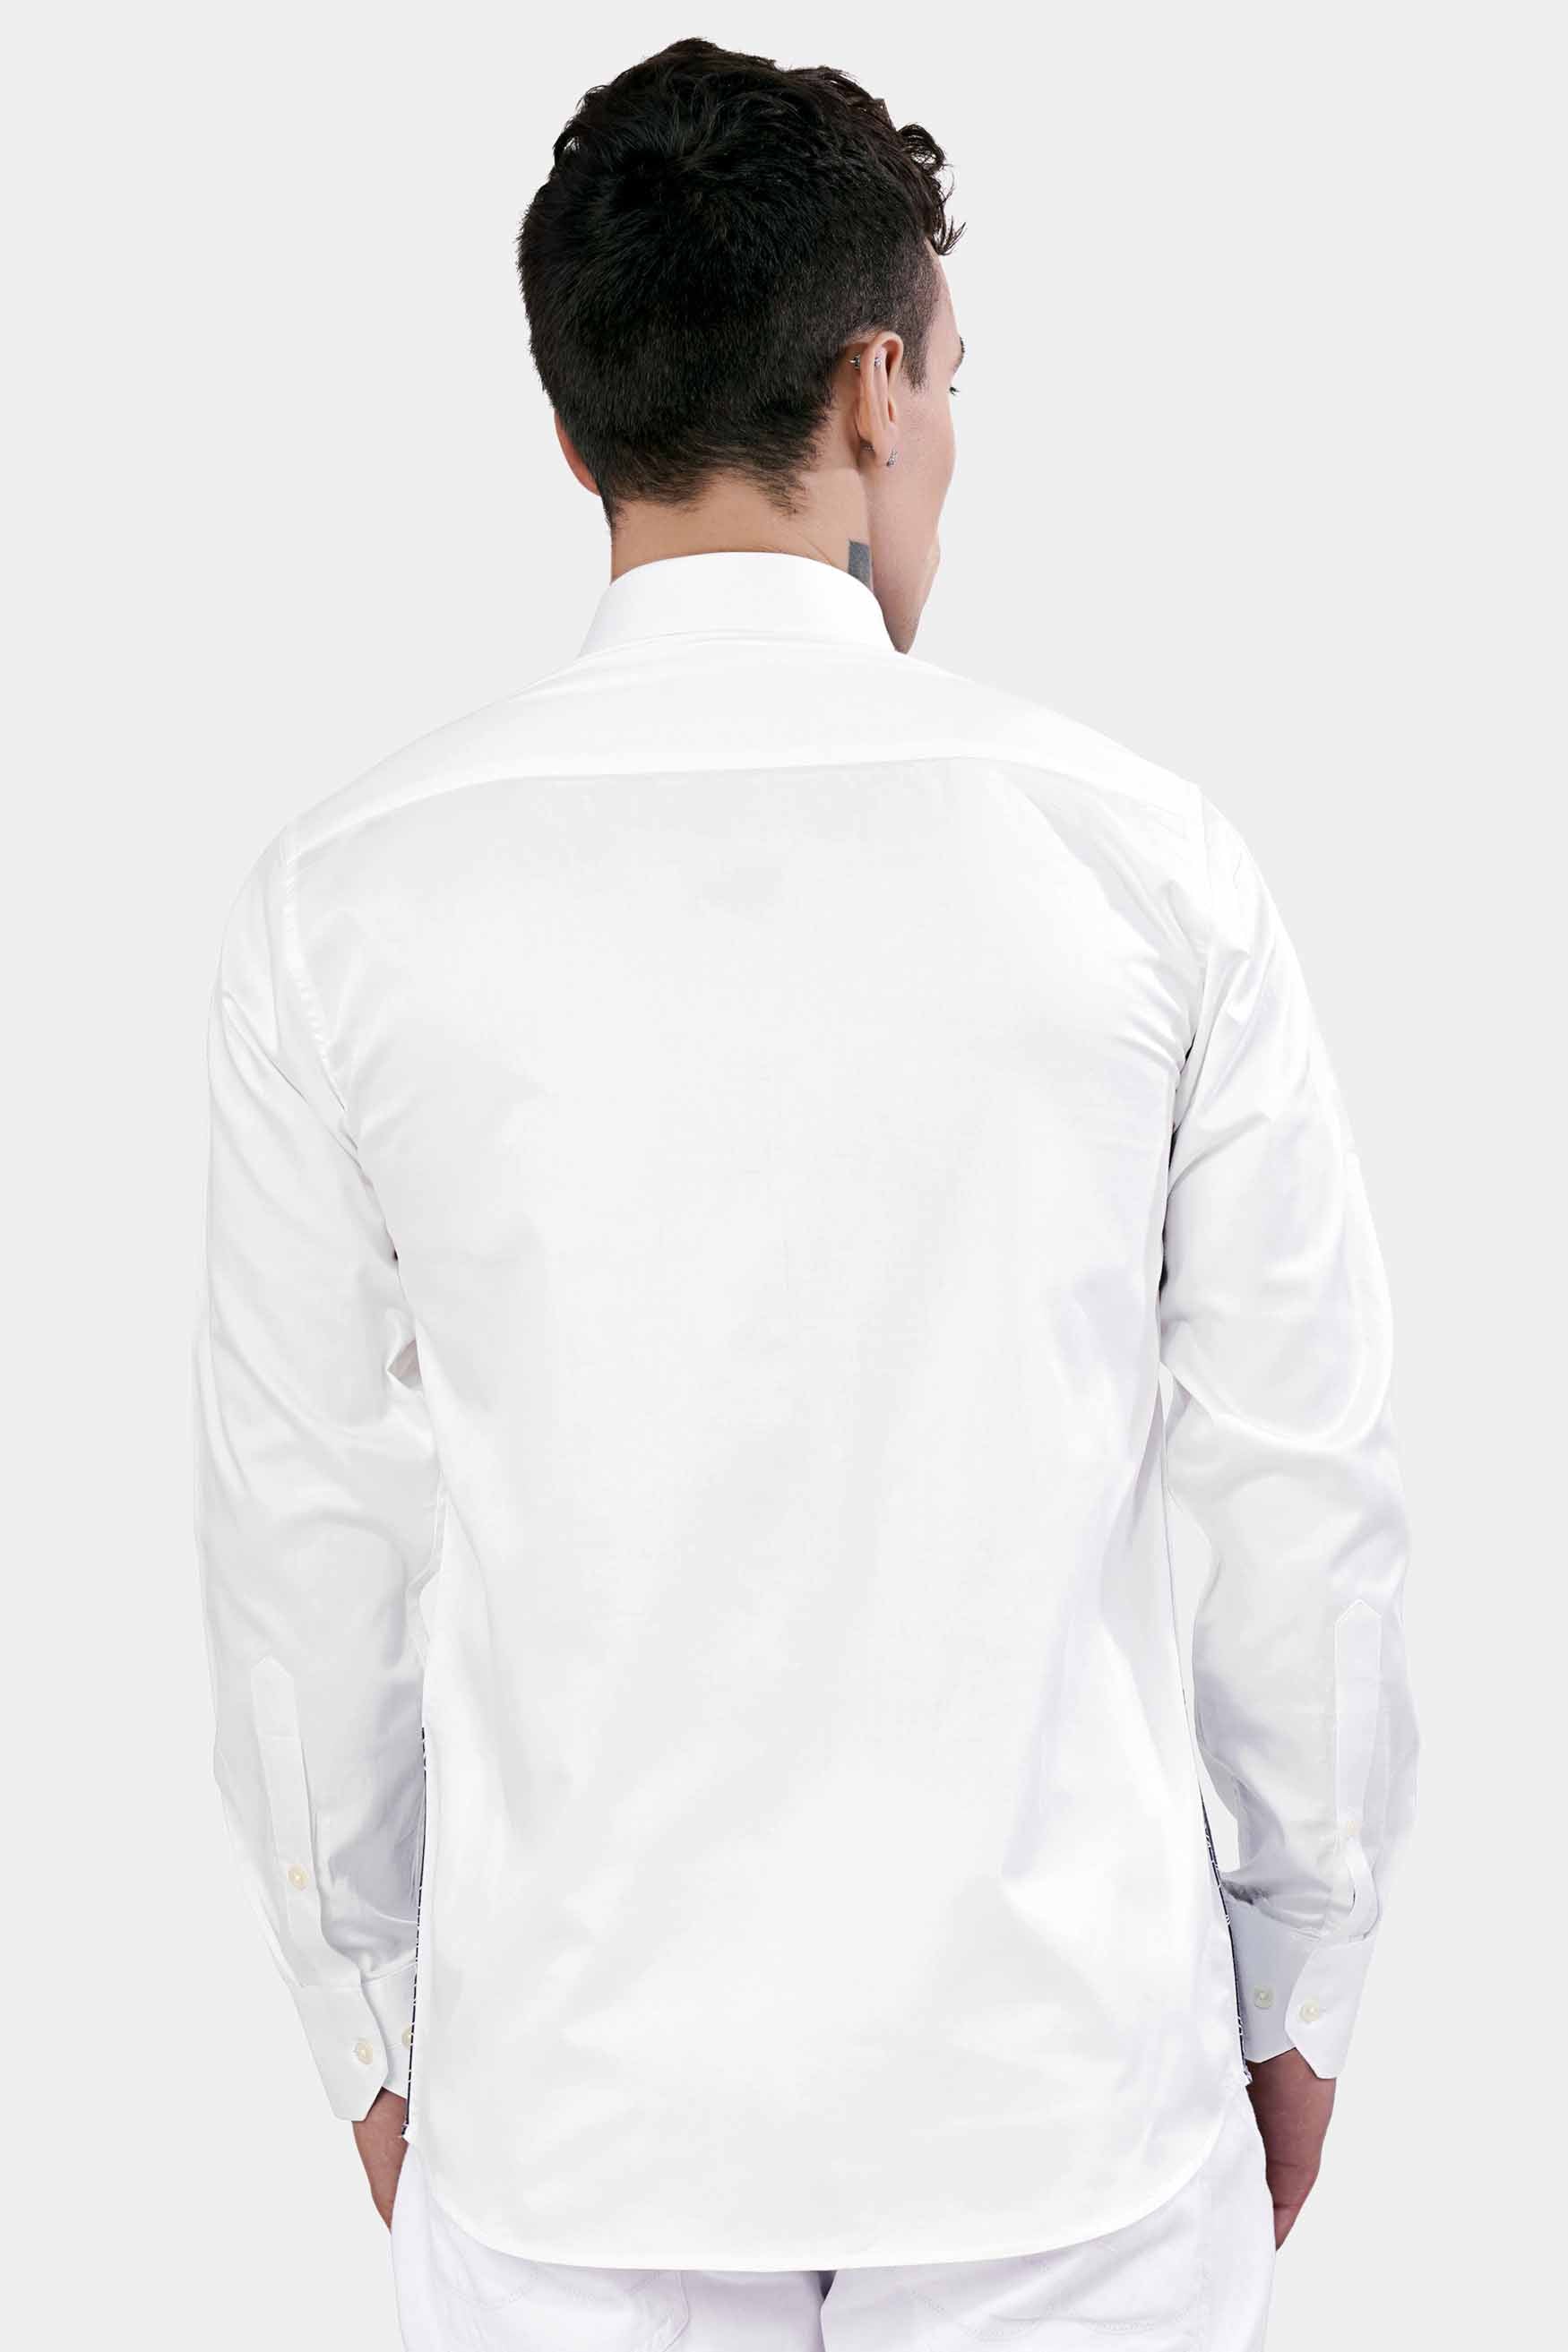 Bright White and Tuna Gray Leaves Printed Subtle Sheen Super Soft Premium Cotton Designer Shirt